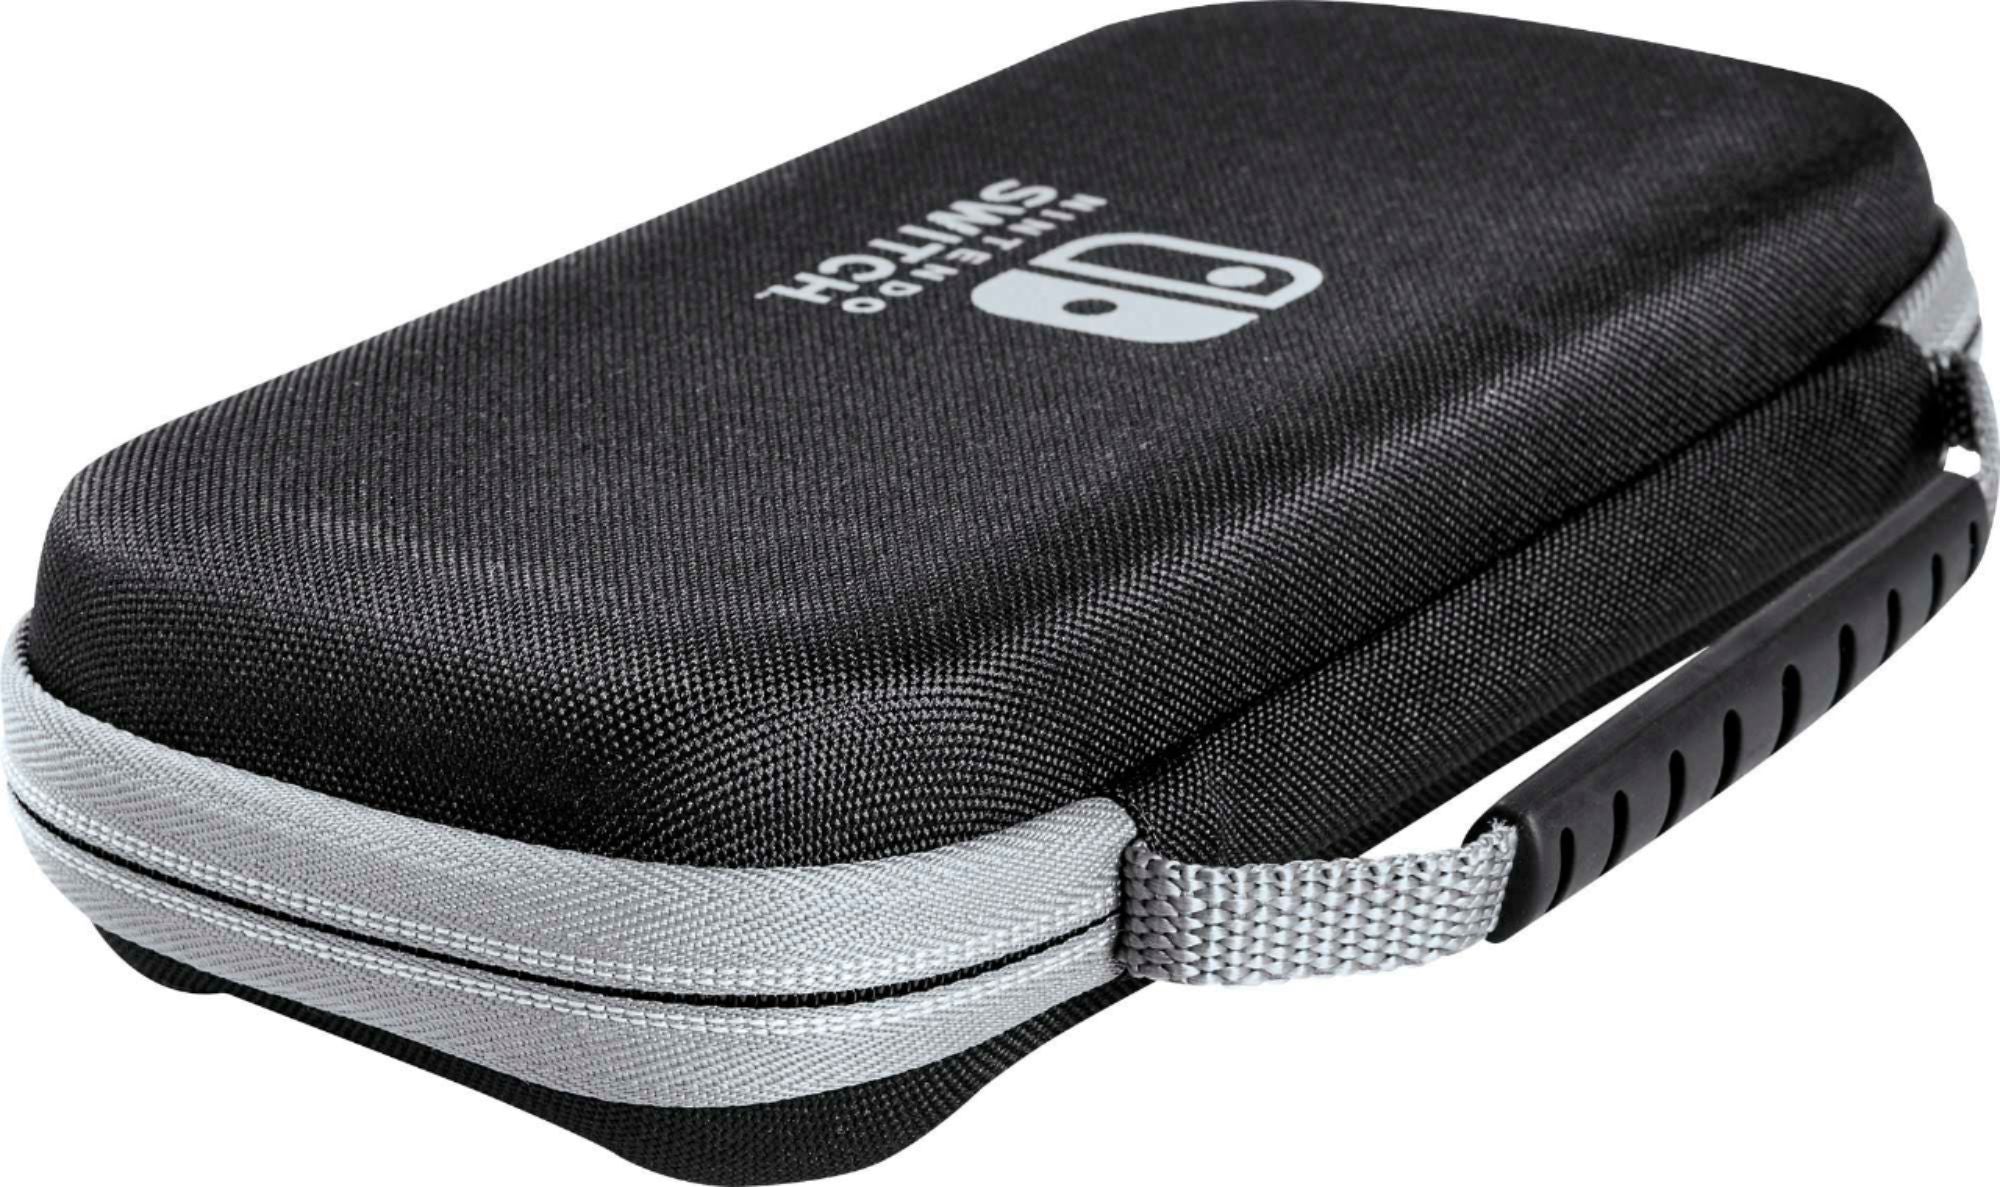 Switch Lite Stealth Case Kit